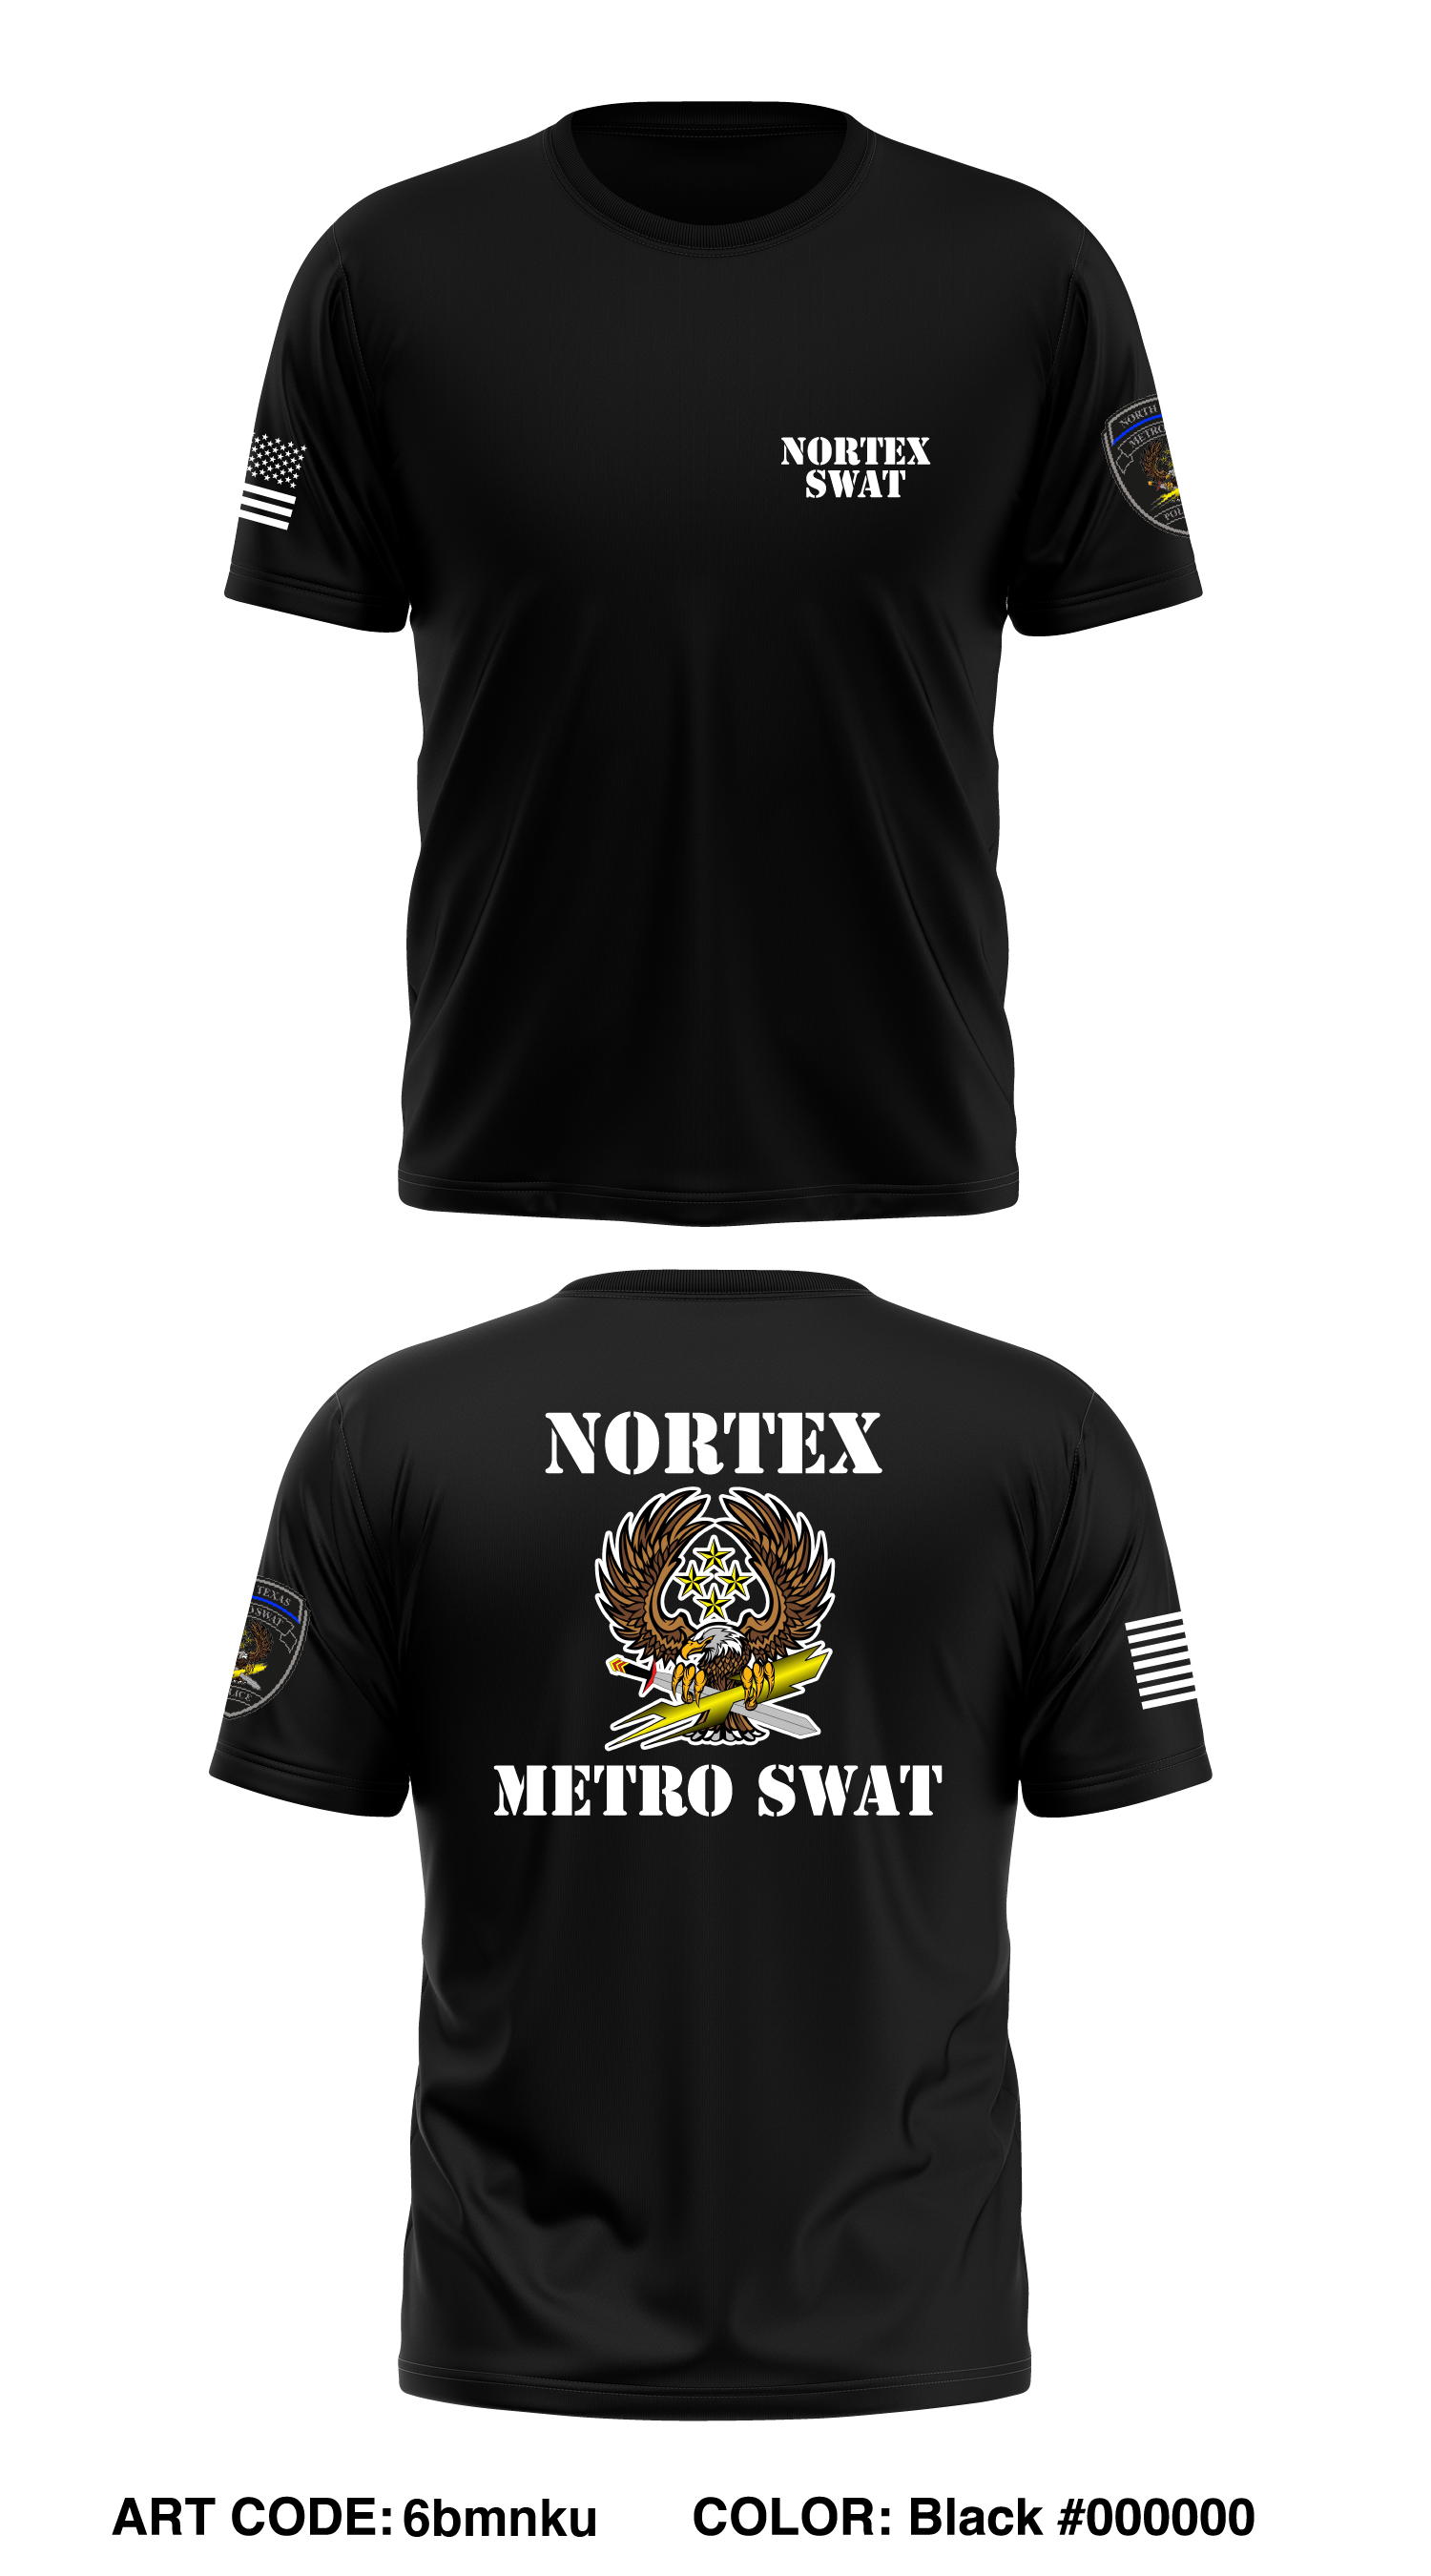 NORTEX SWAT Store Core Men's SS Performance Tee 6bmnku – Emblem Athletic